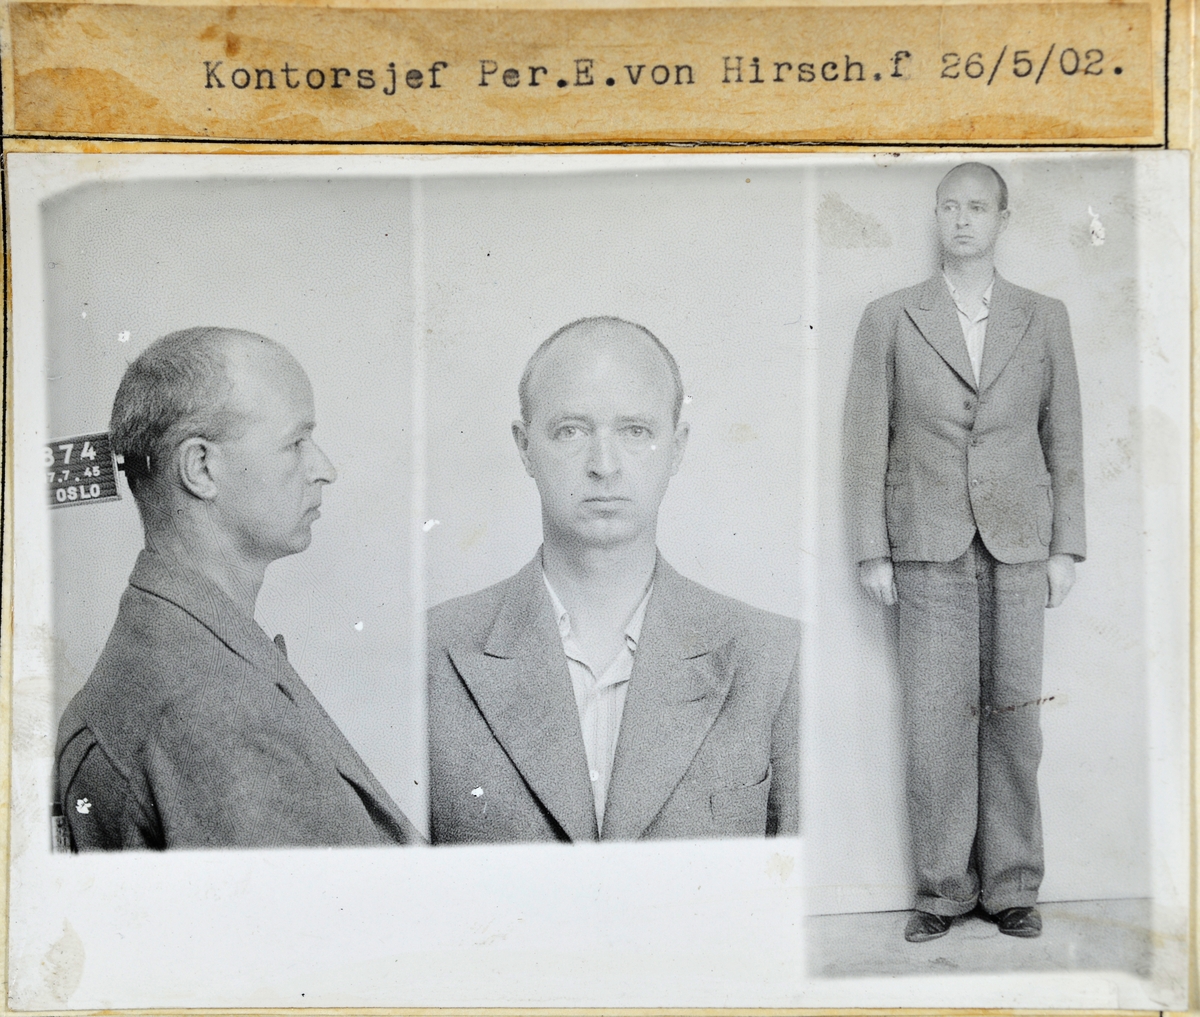 Forbryterportrett av minister Per E. von Hirsch